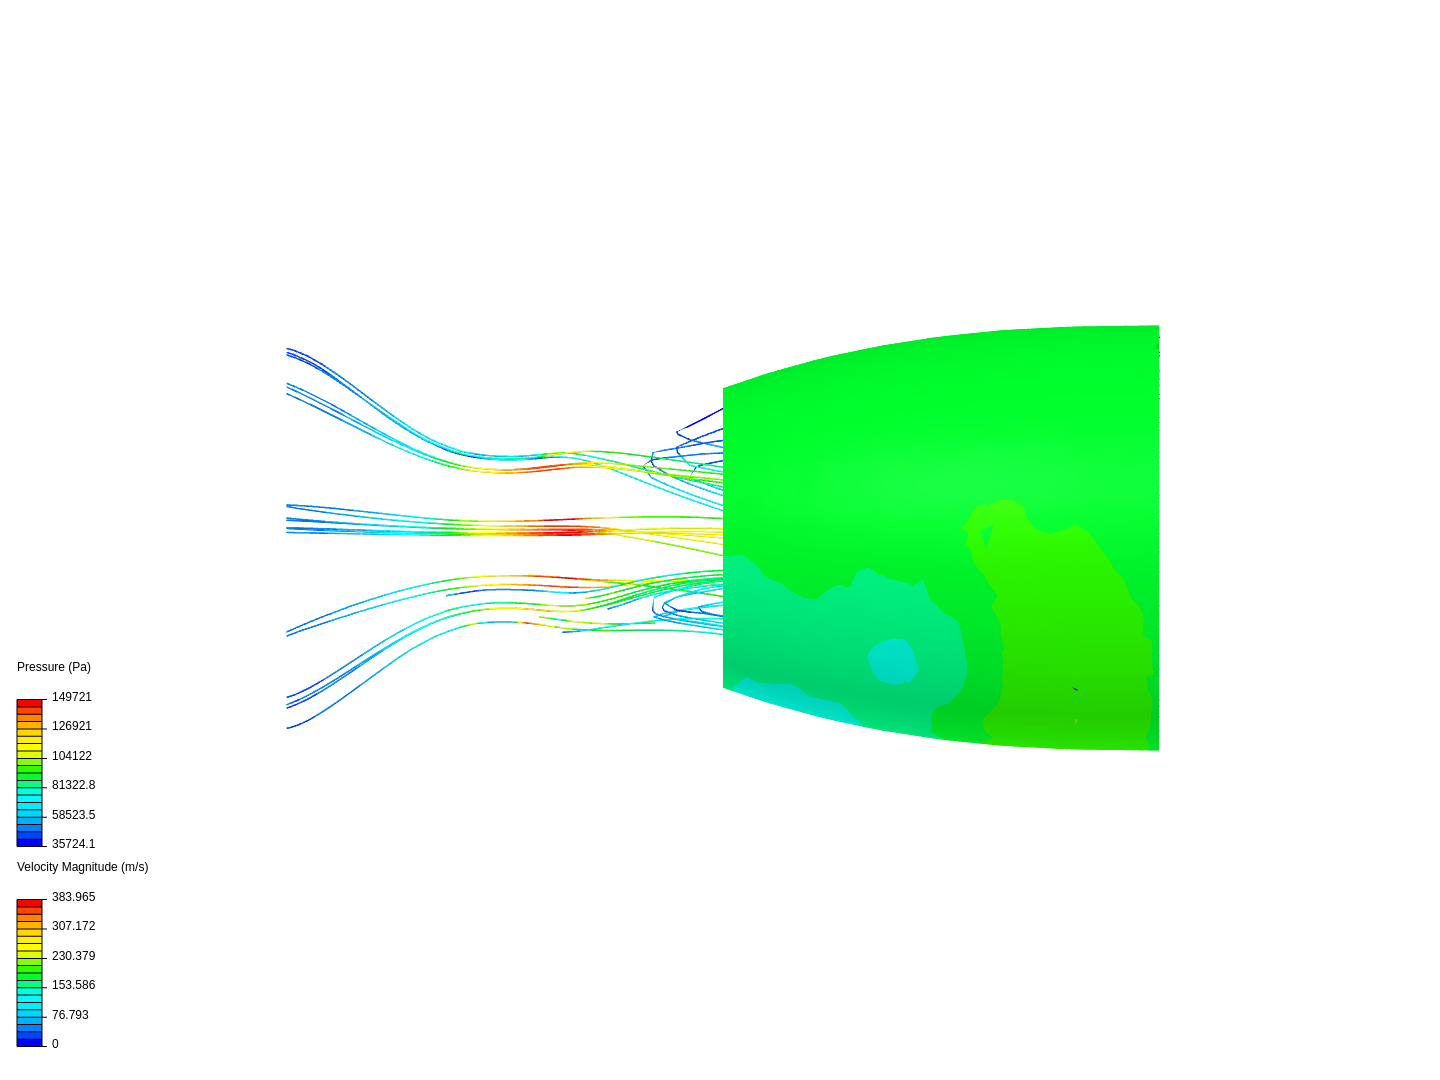 Shock Waves (Pout0.9bar). image